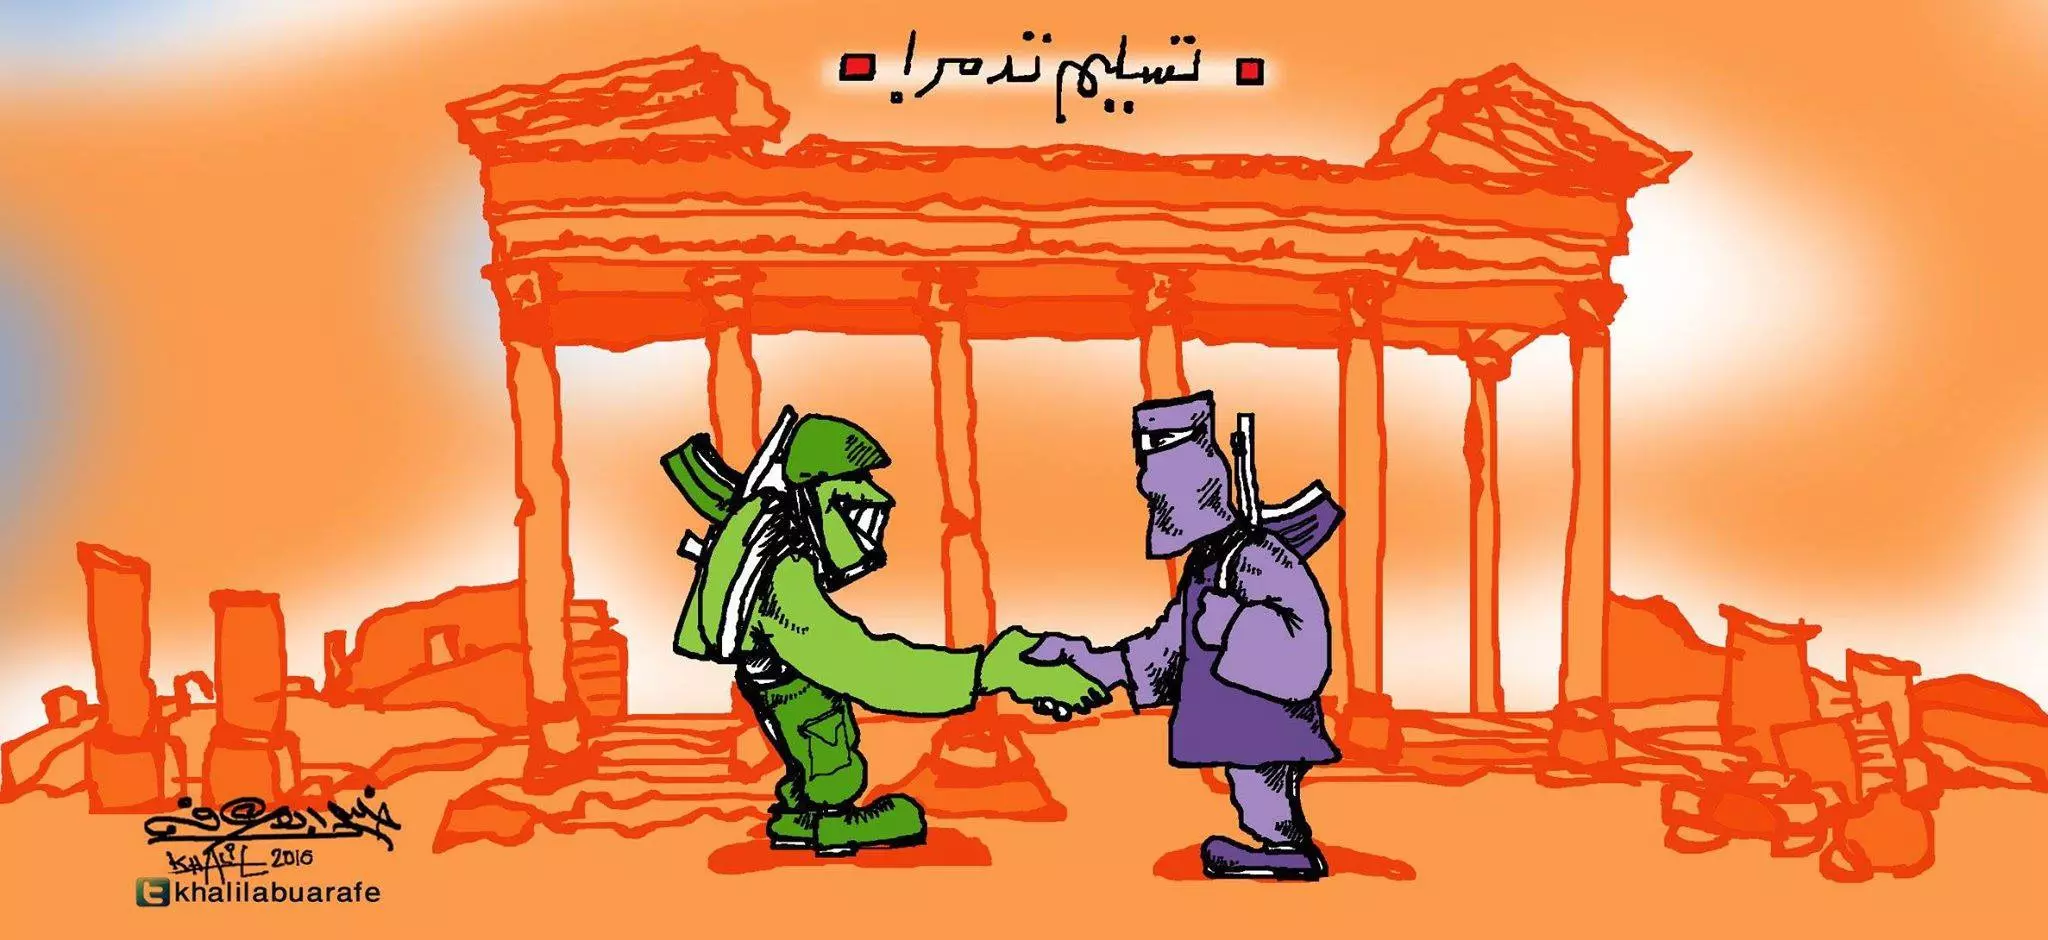 تسليم تدمر | Handing over Palmyra